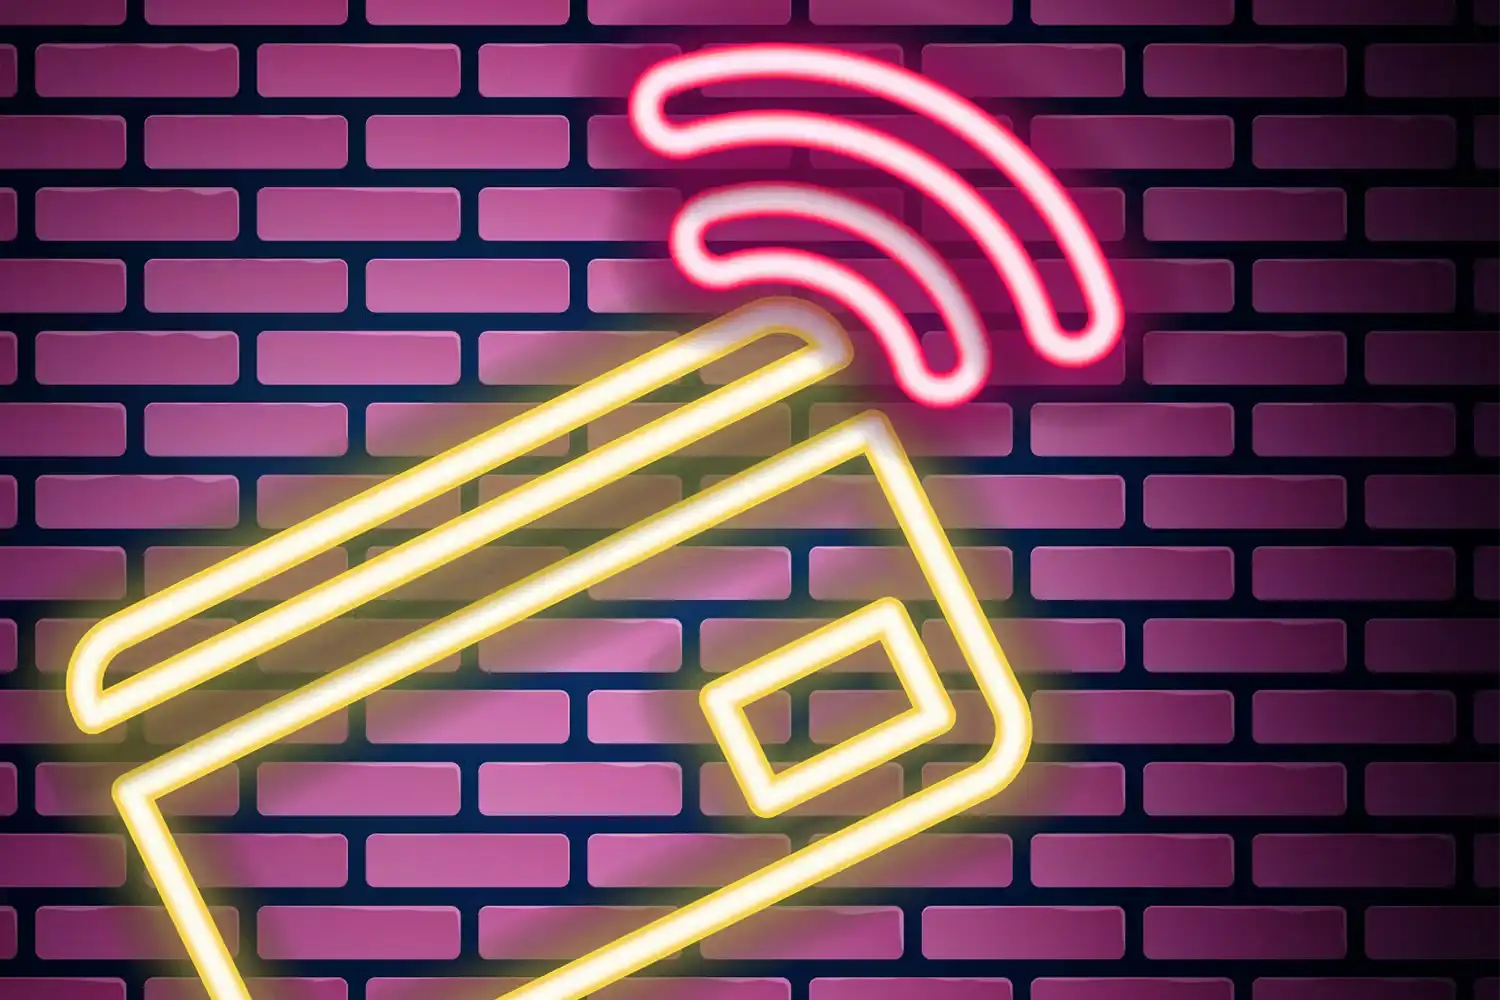 Cartoon Credit Card, pink brick backdrop